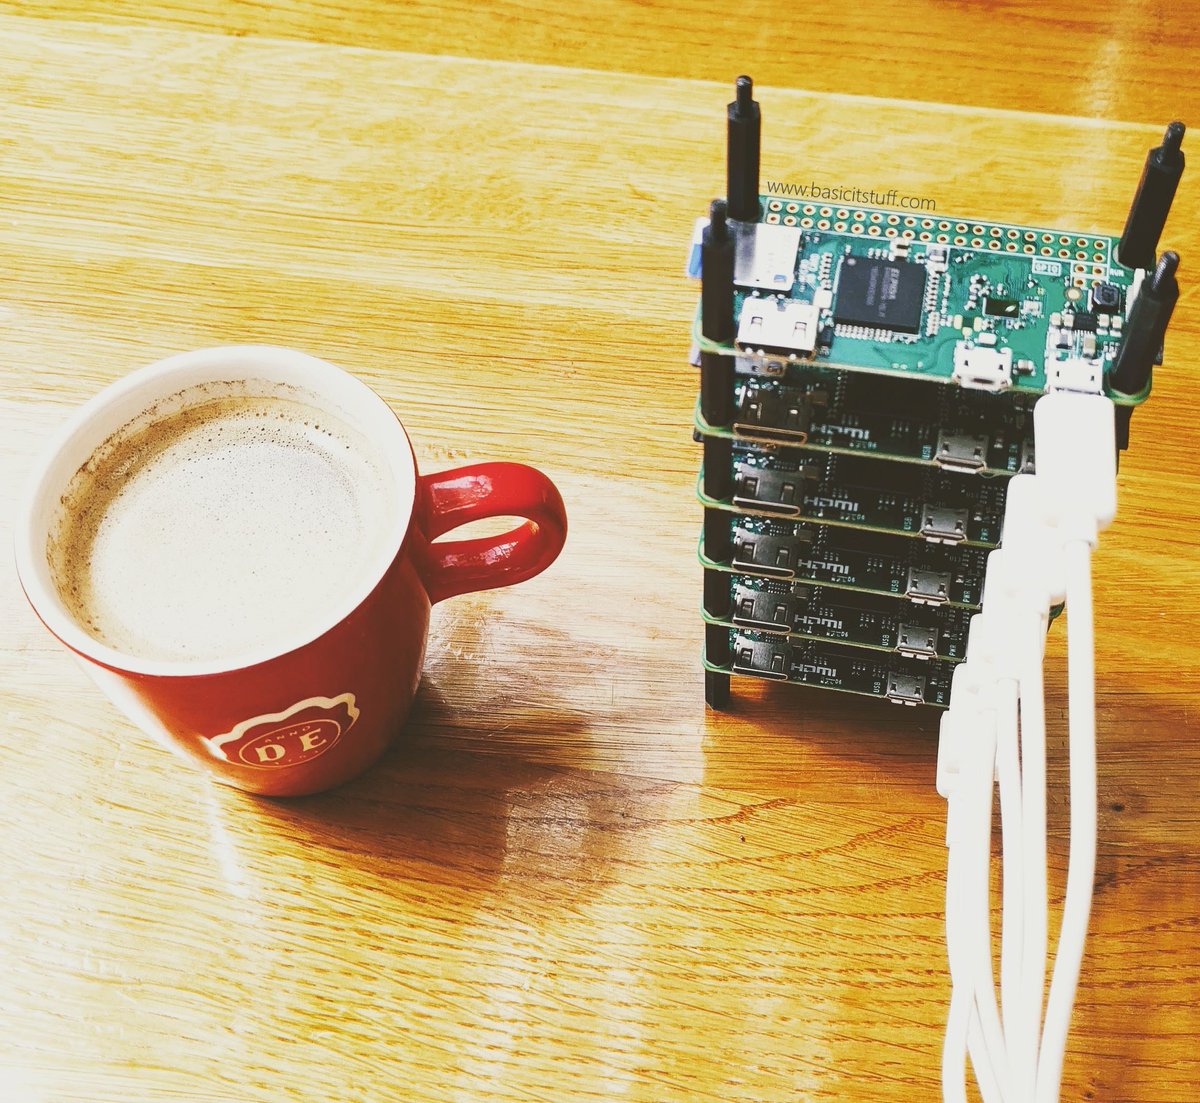 Raspberry Pi Zero Cluster project from a while ago
- link in bio -
Like | Retweet | Follow
#raspberry #raspberrypi #raspberrypi4 #raspberrypi3 #raspberrypi2 #raspberrypizero #pcb #minipc #bananapi #odroid #nanopi #pine64 #linux #linuxuser #programming #programmer #coder #geek